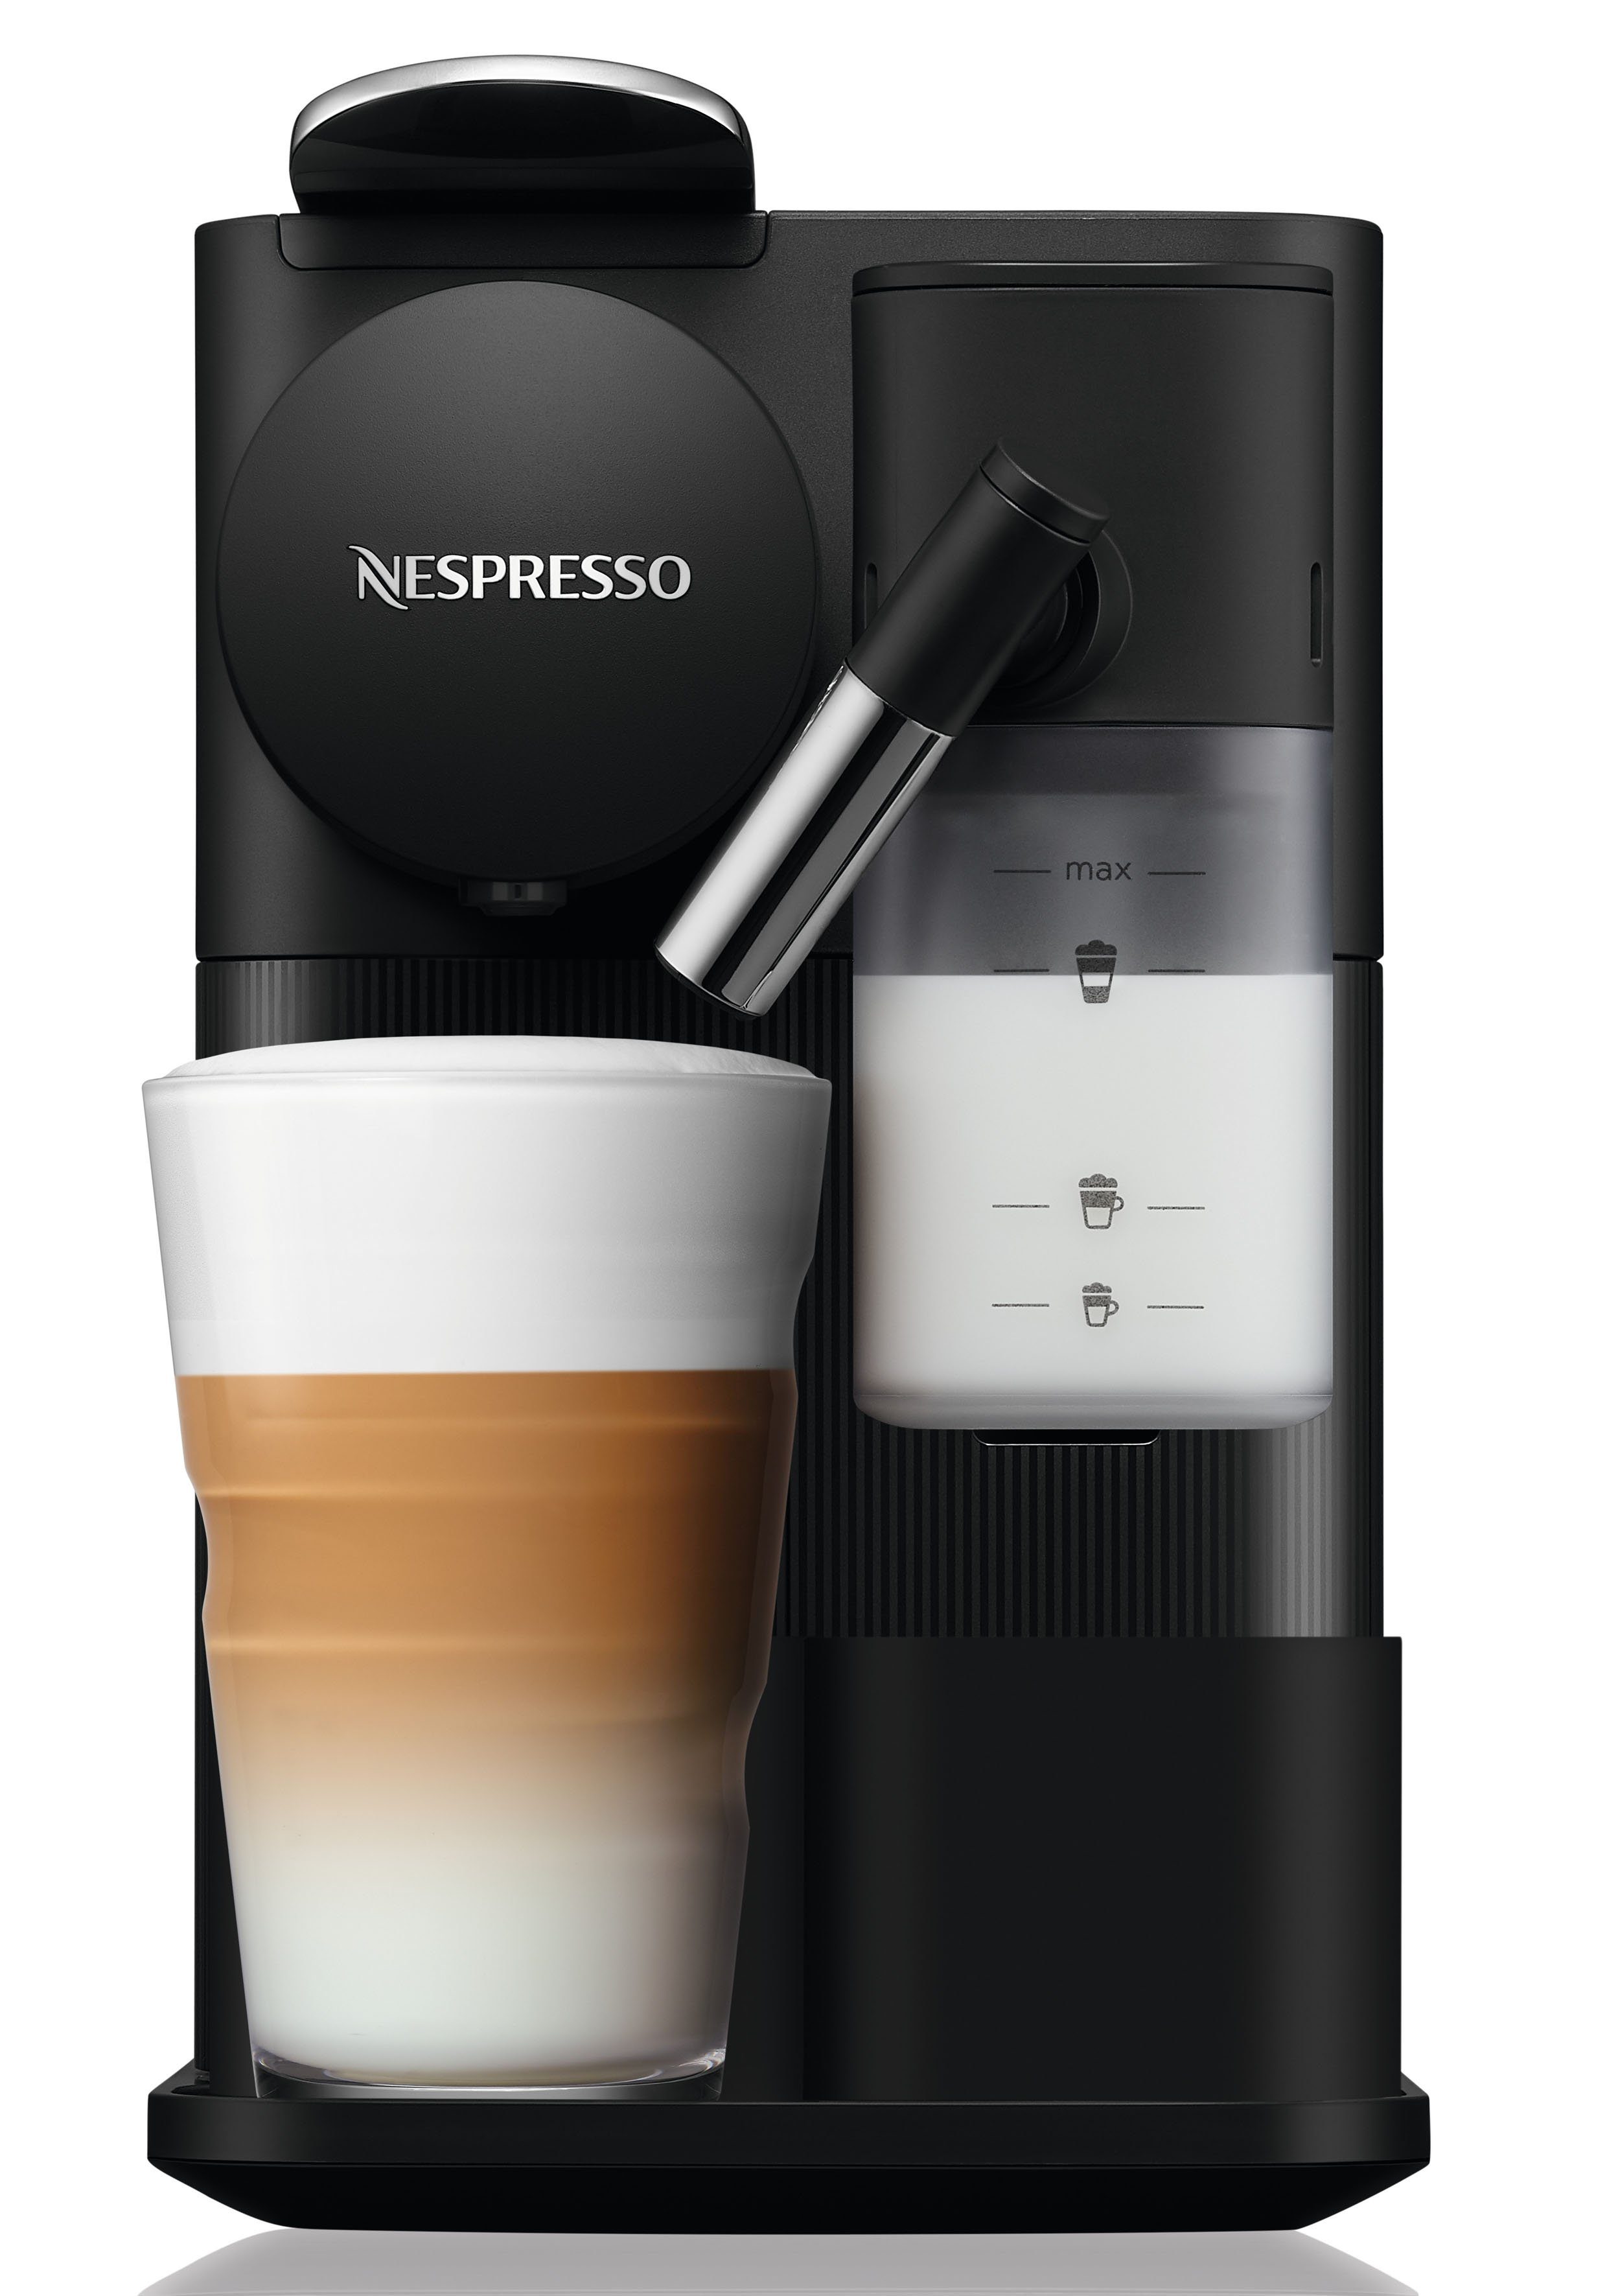 Willkommenspaket One von DeLonghi, EN510.B Nespresso inkl. 7 mit Kapseln Kapselmaschine Lattissima Black,